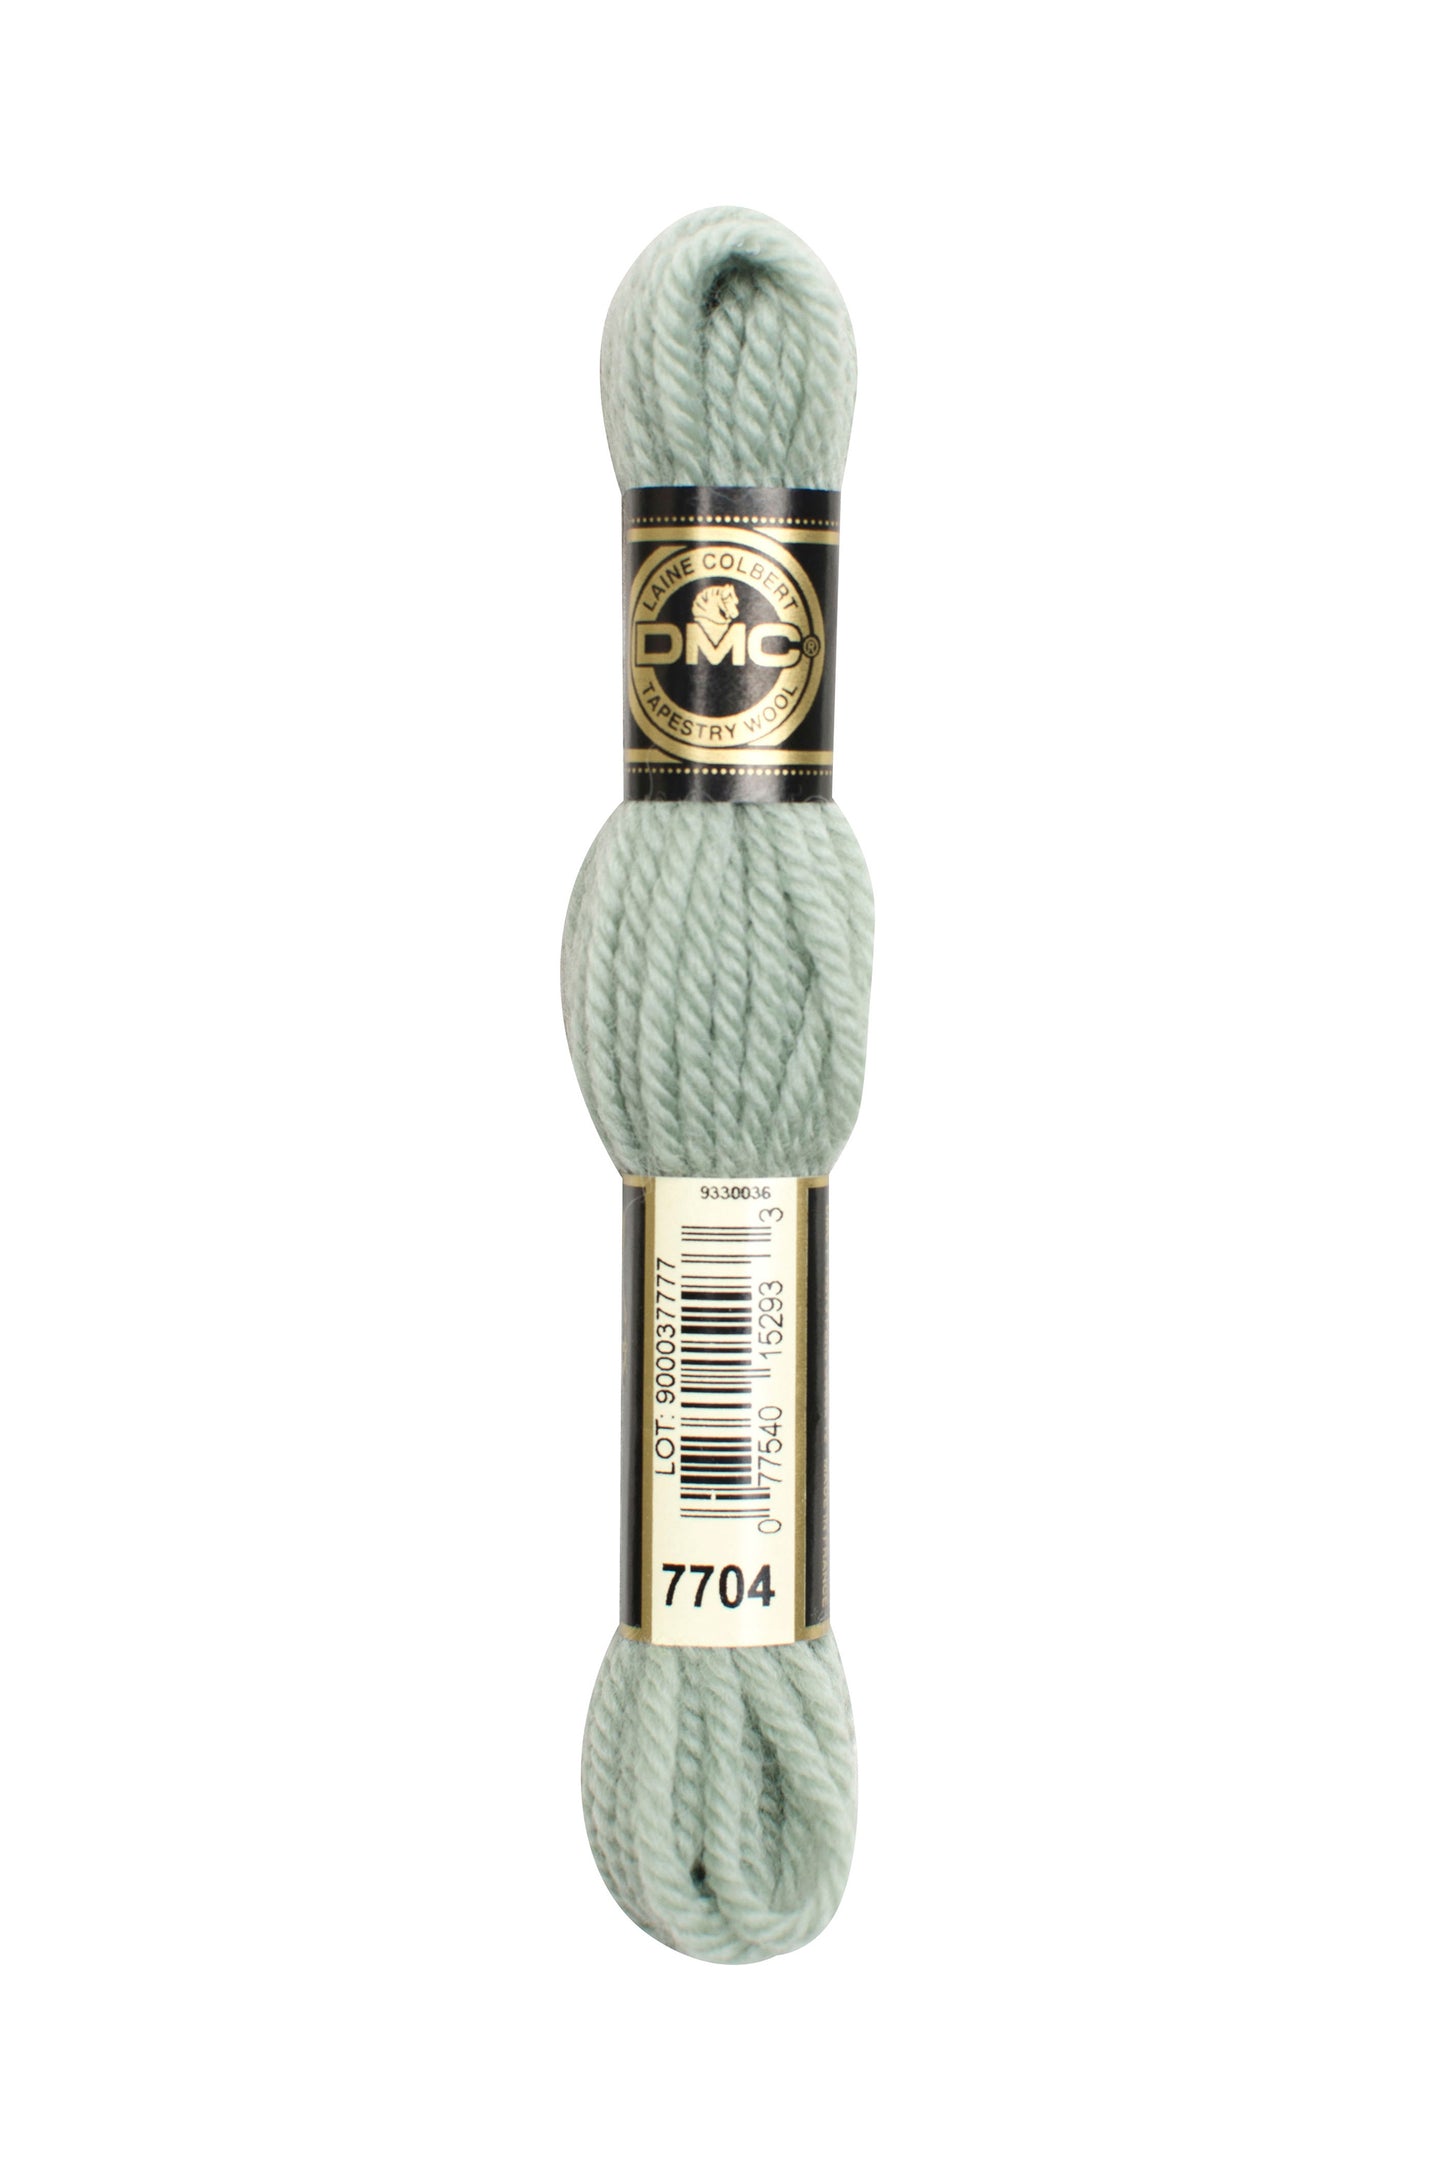 7704 – DMC Tapestry Wool